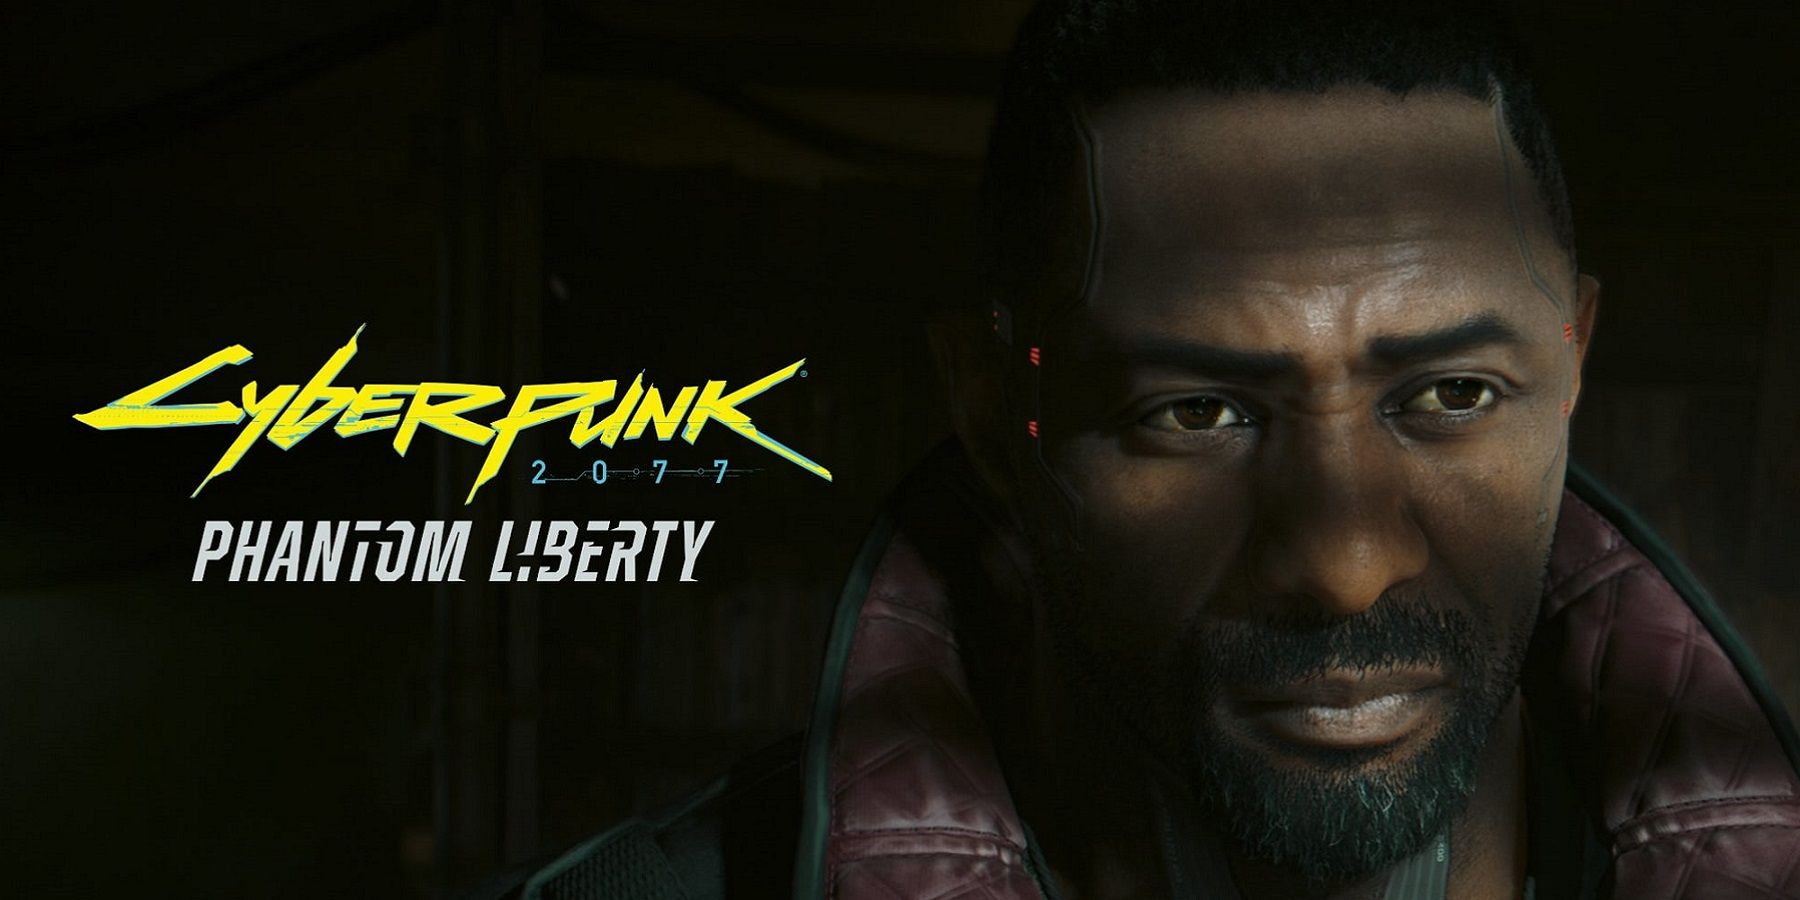 Image from Cyberpunk 2077 Phantom Liberty DLC showing Idris Elba's character.